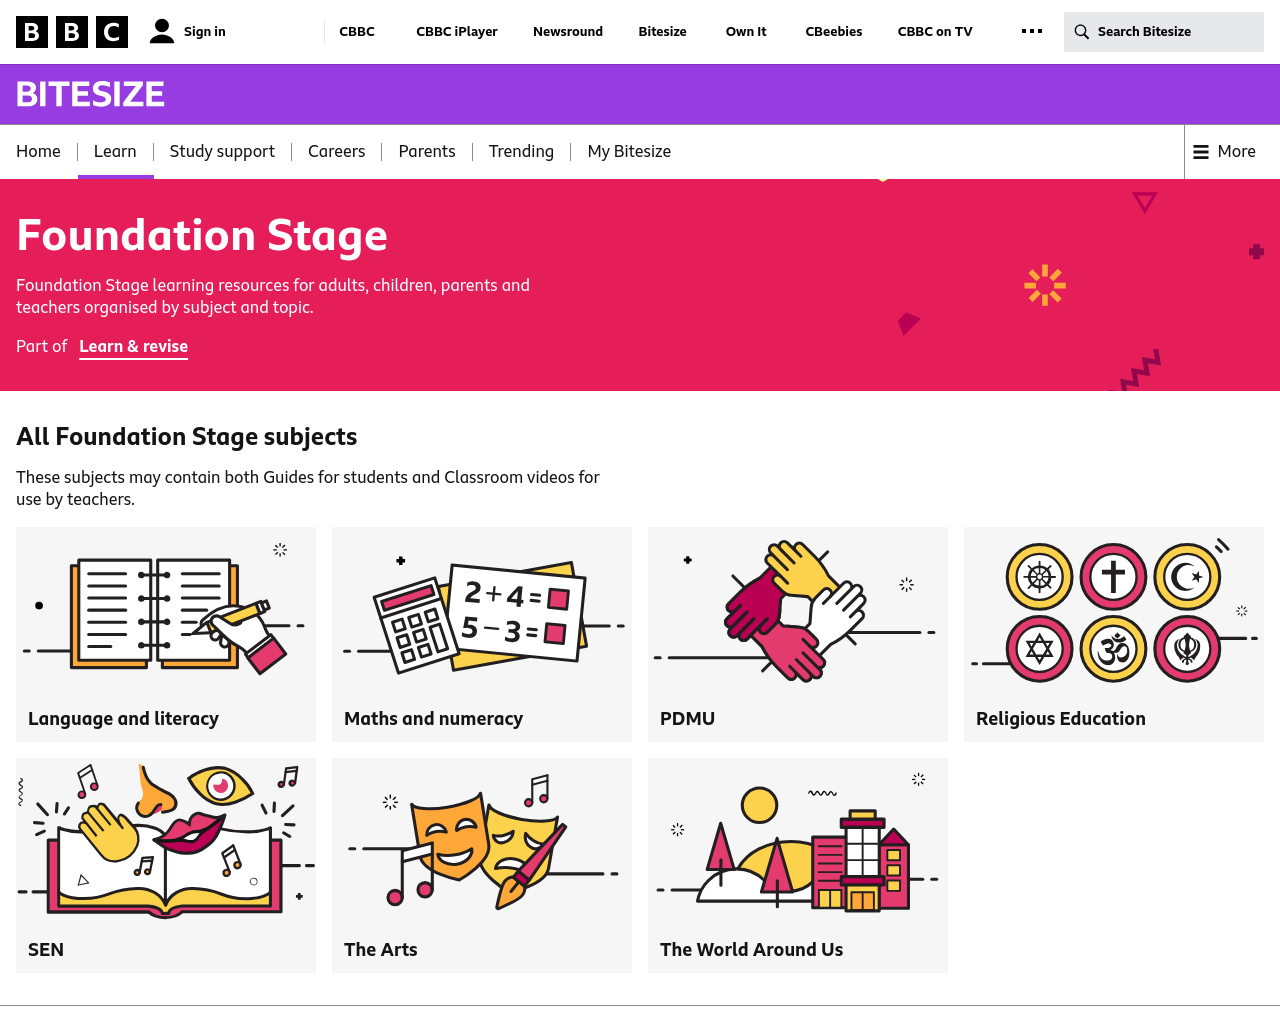 BBC Foundation Stage website